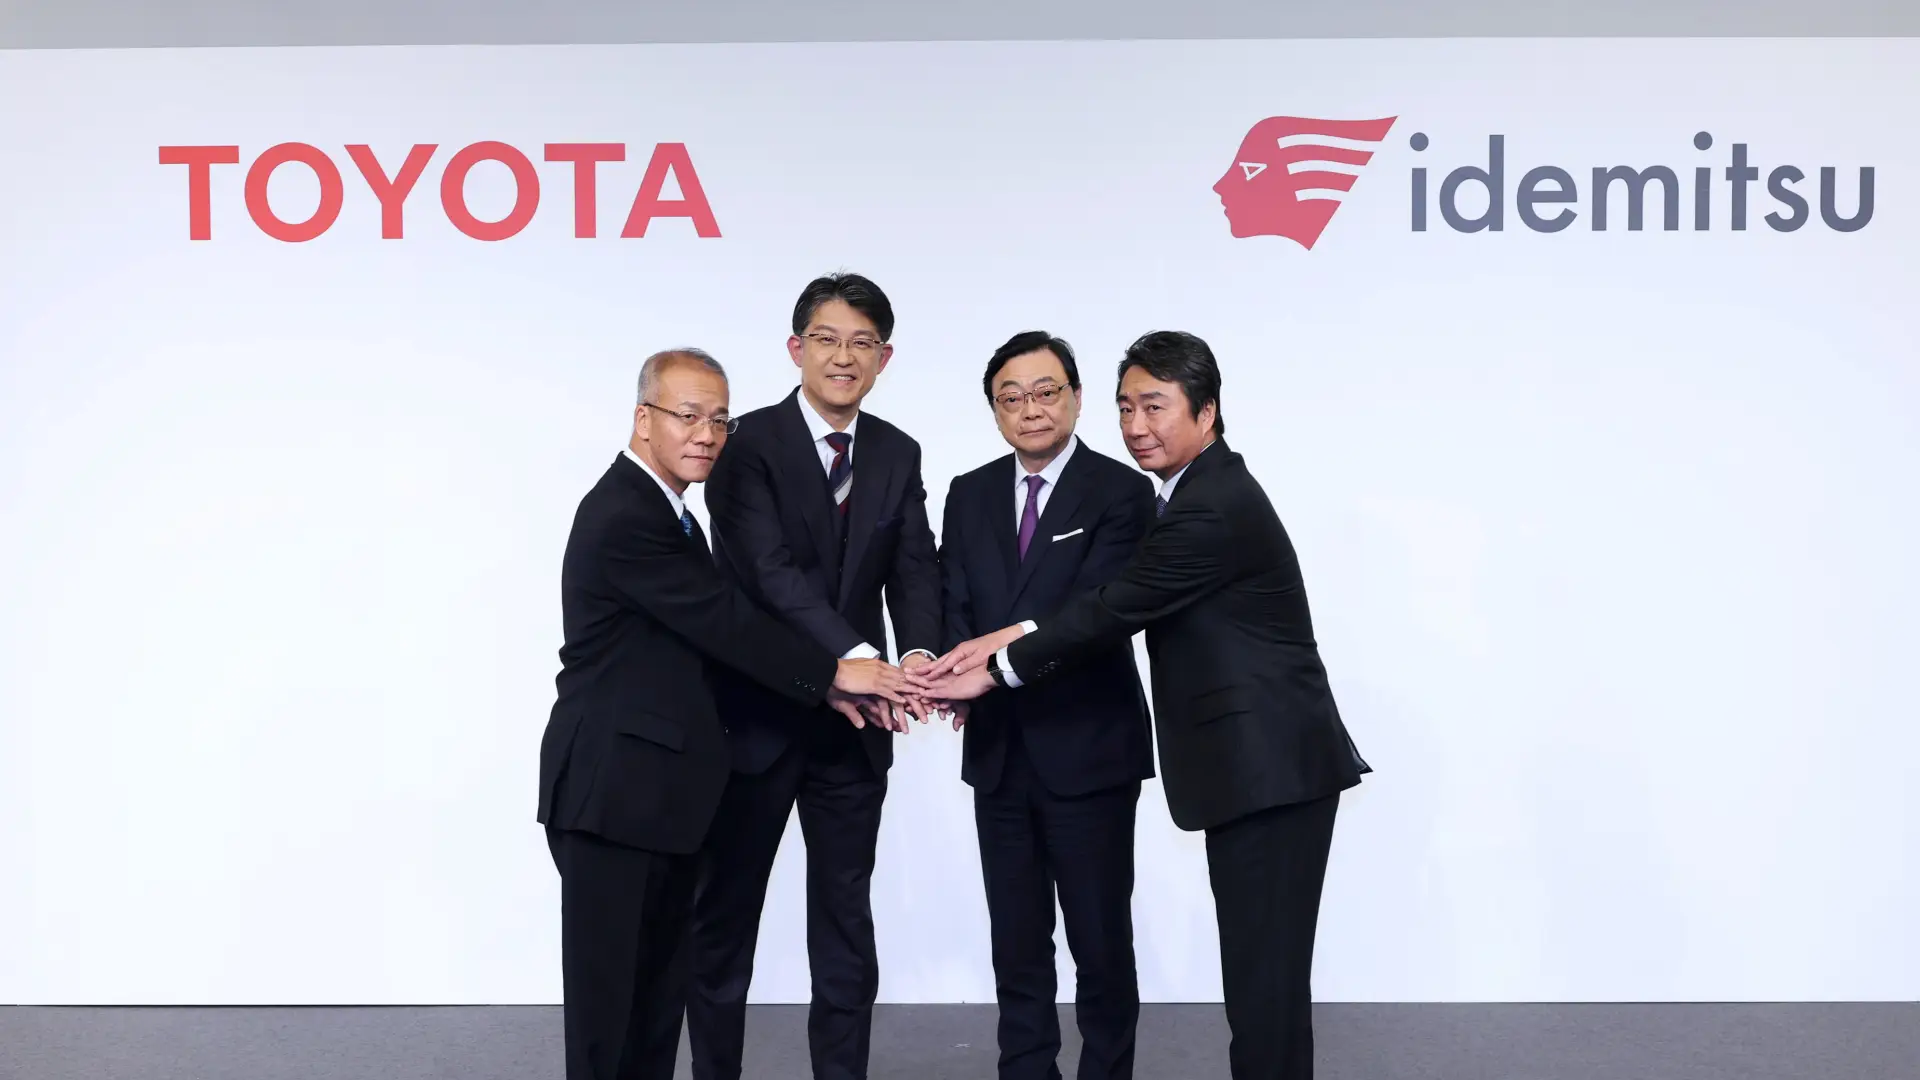 Toyota and idemitsu partnership